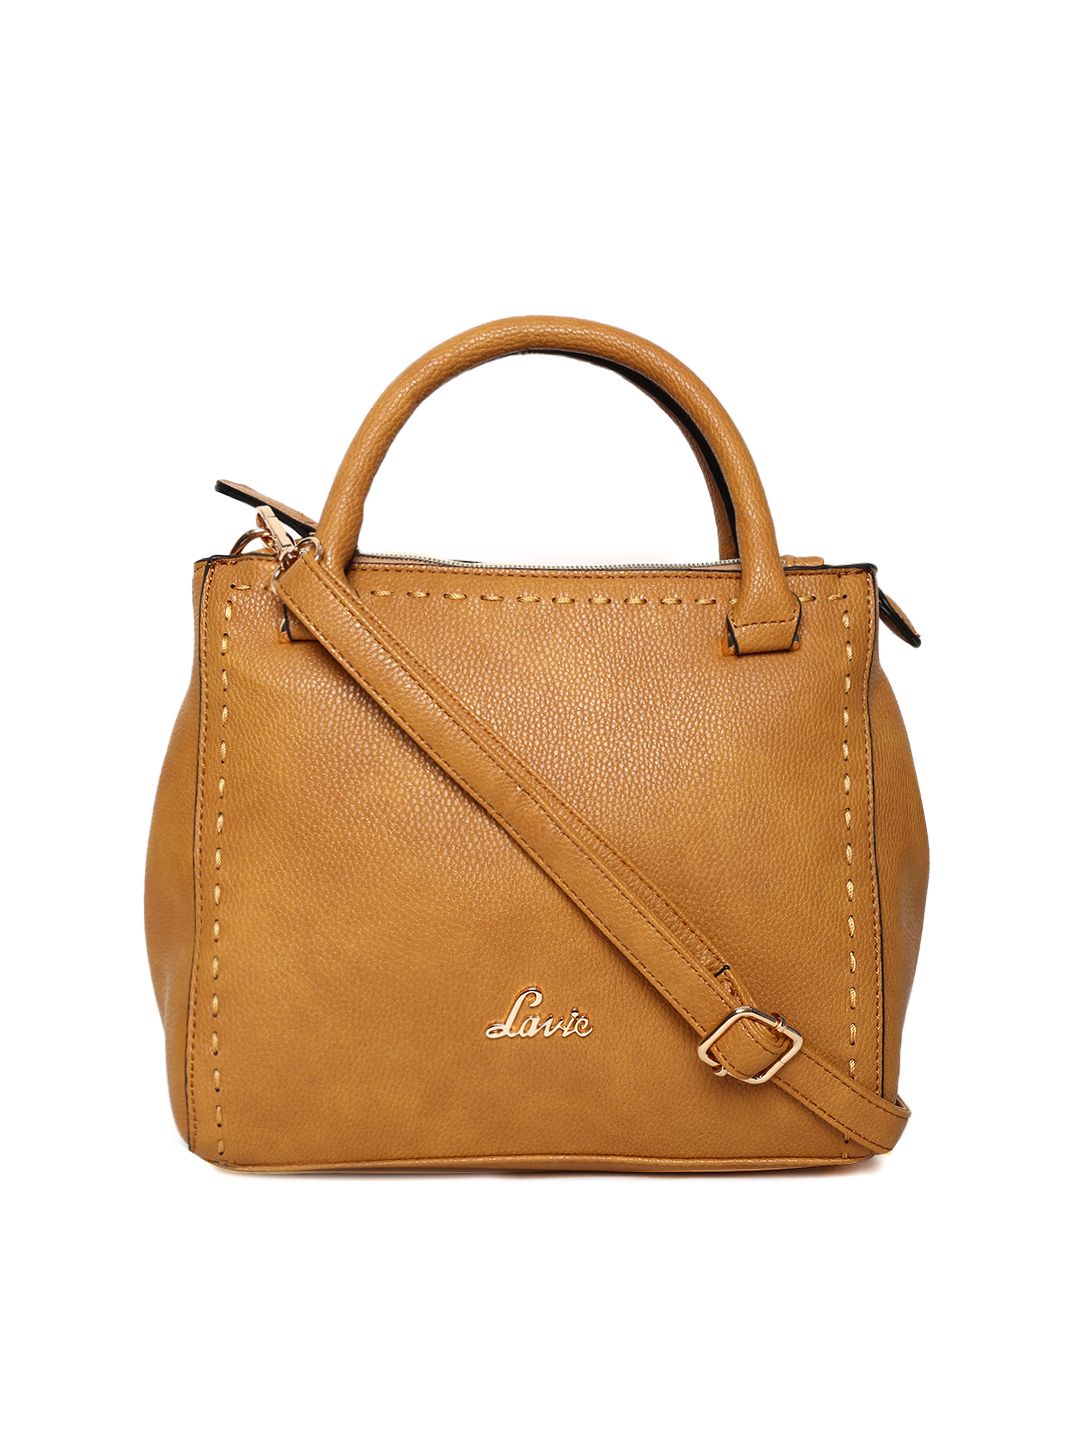 Lavie Brown Solid Handheld Bag Price in India